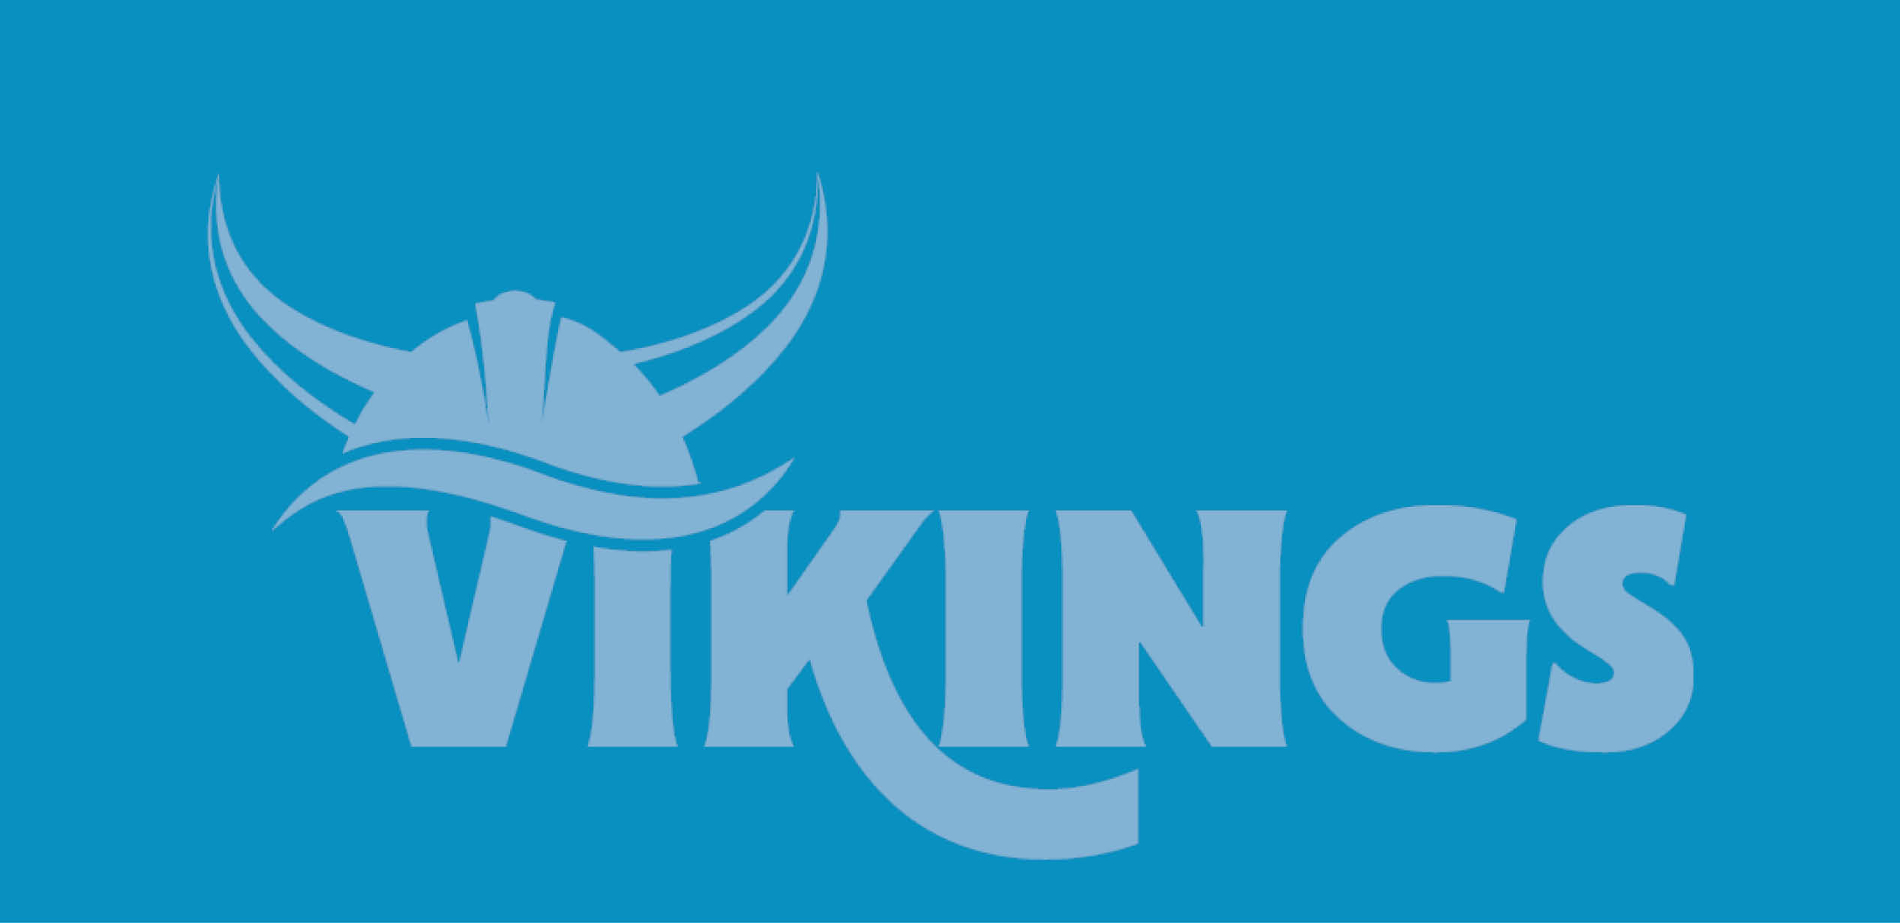 Viking Spirit Symbol against a blue background